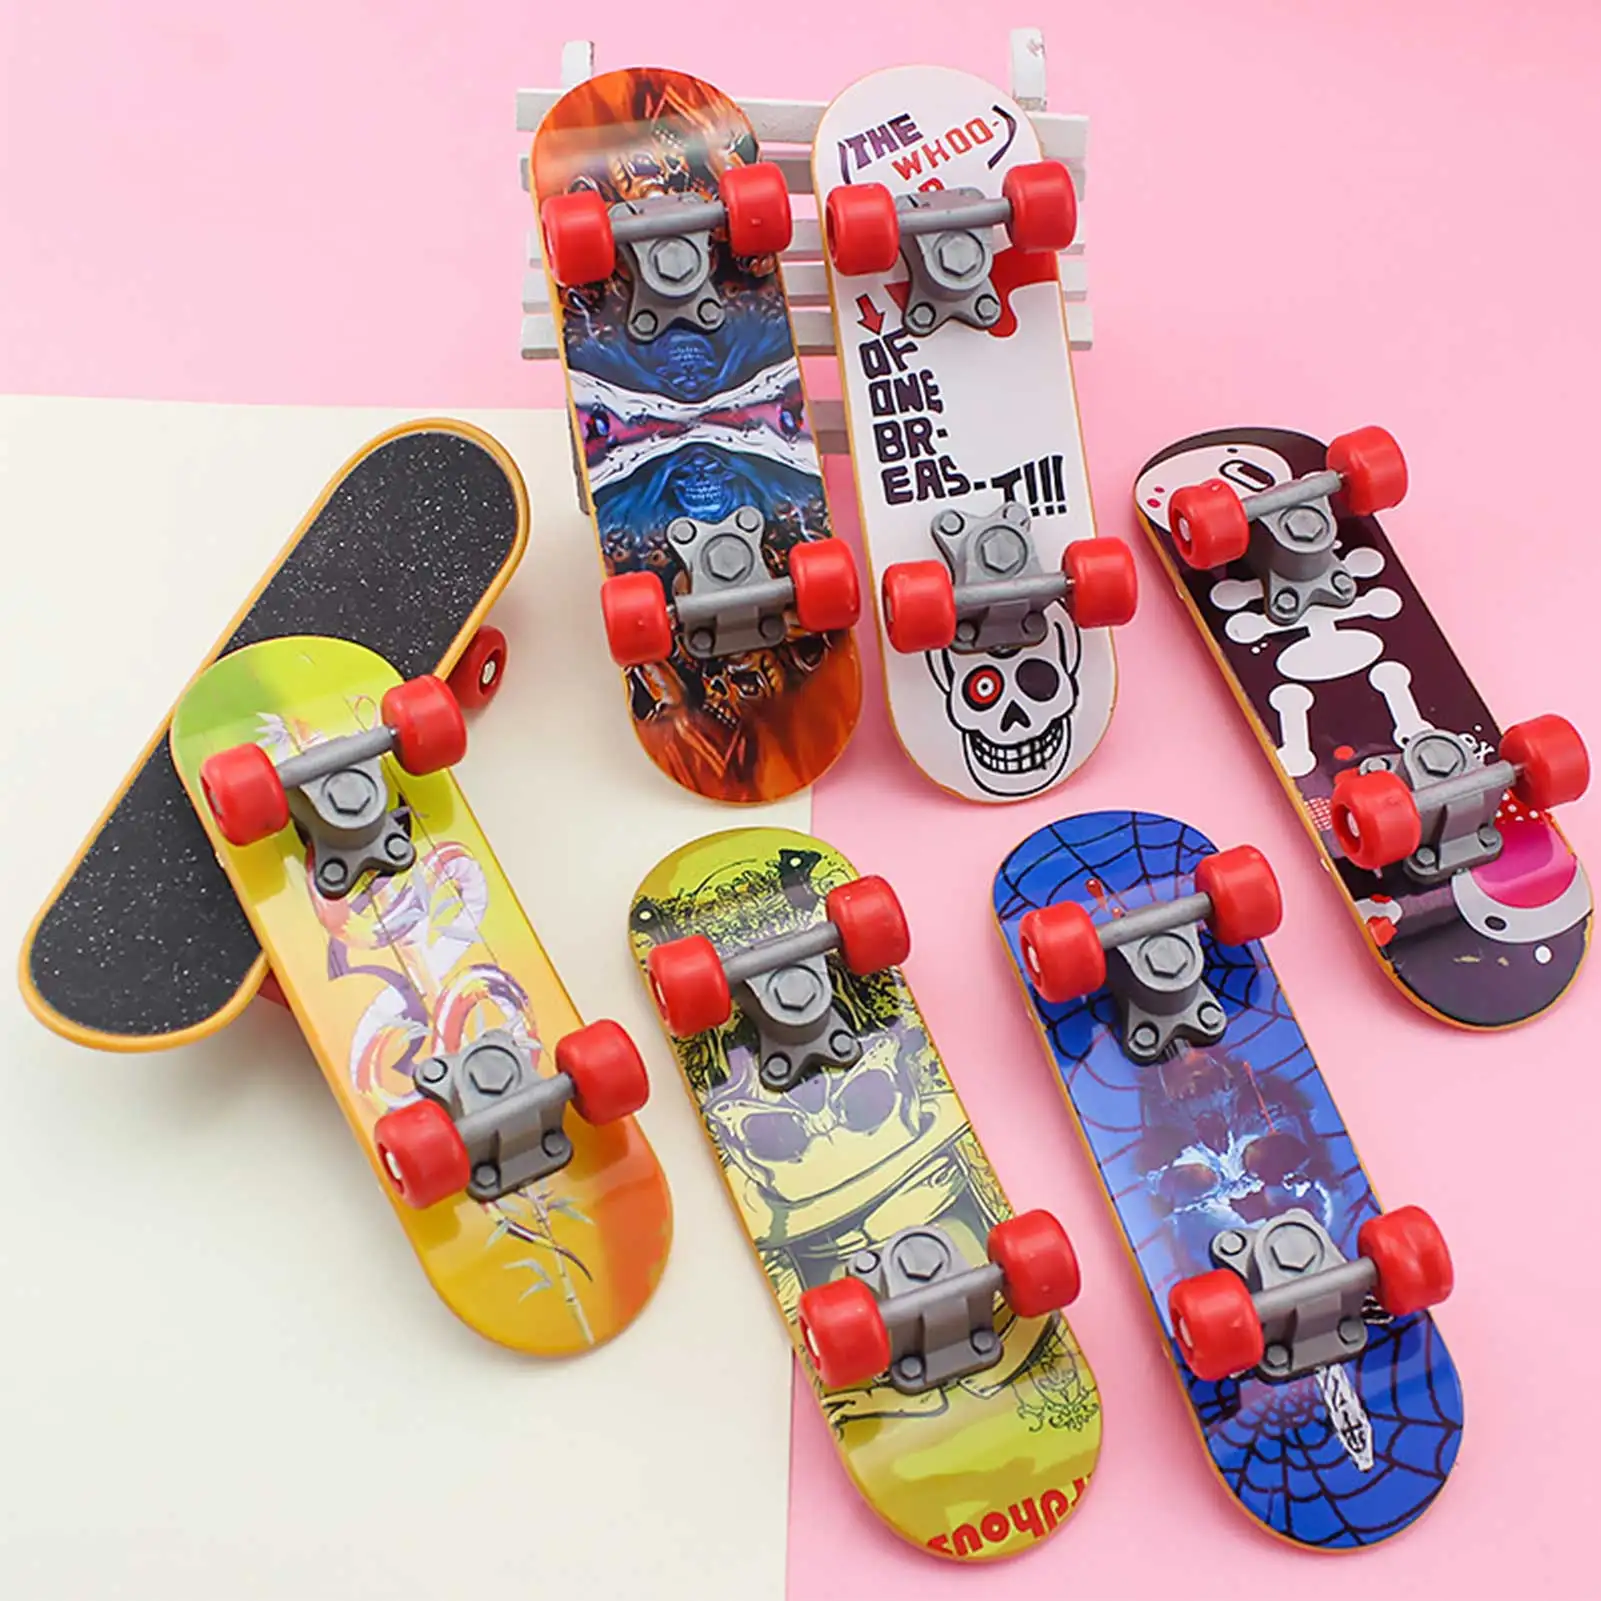 Finger Board Truck Mini Skateboard Toy Boy Kids Children Young Kids Gift 